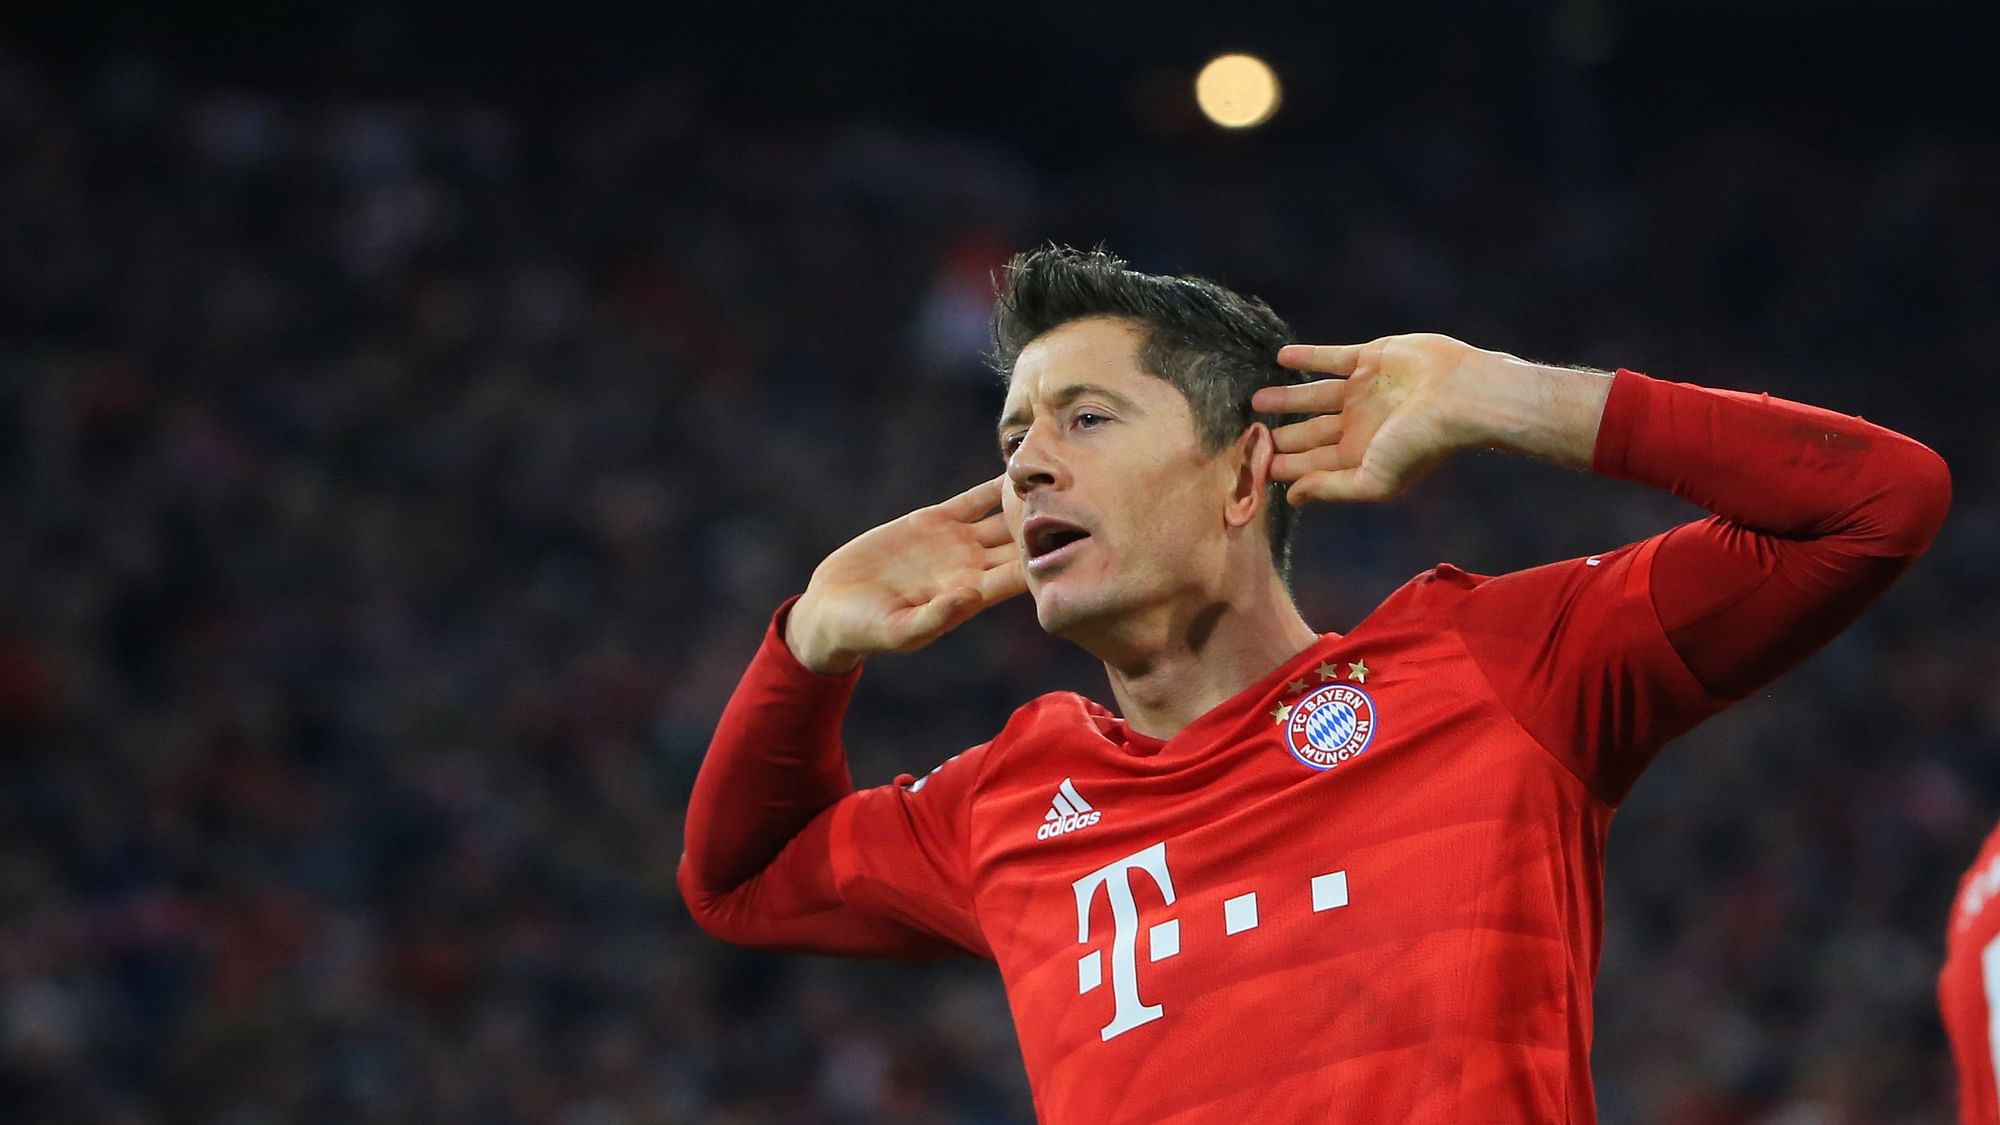 Robert Lewandowski of Bayern Munich celebrates a goal during a Bundesliga match in November, 2019. The German football league is set to make a comeback this weekend.